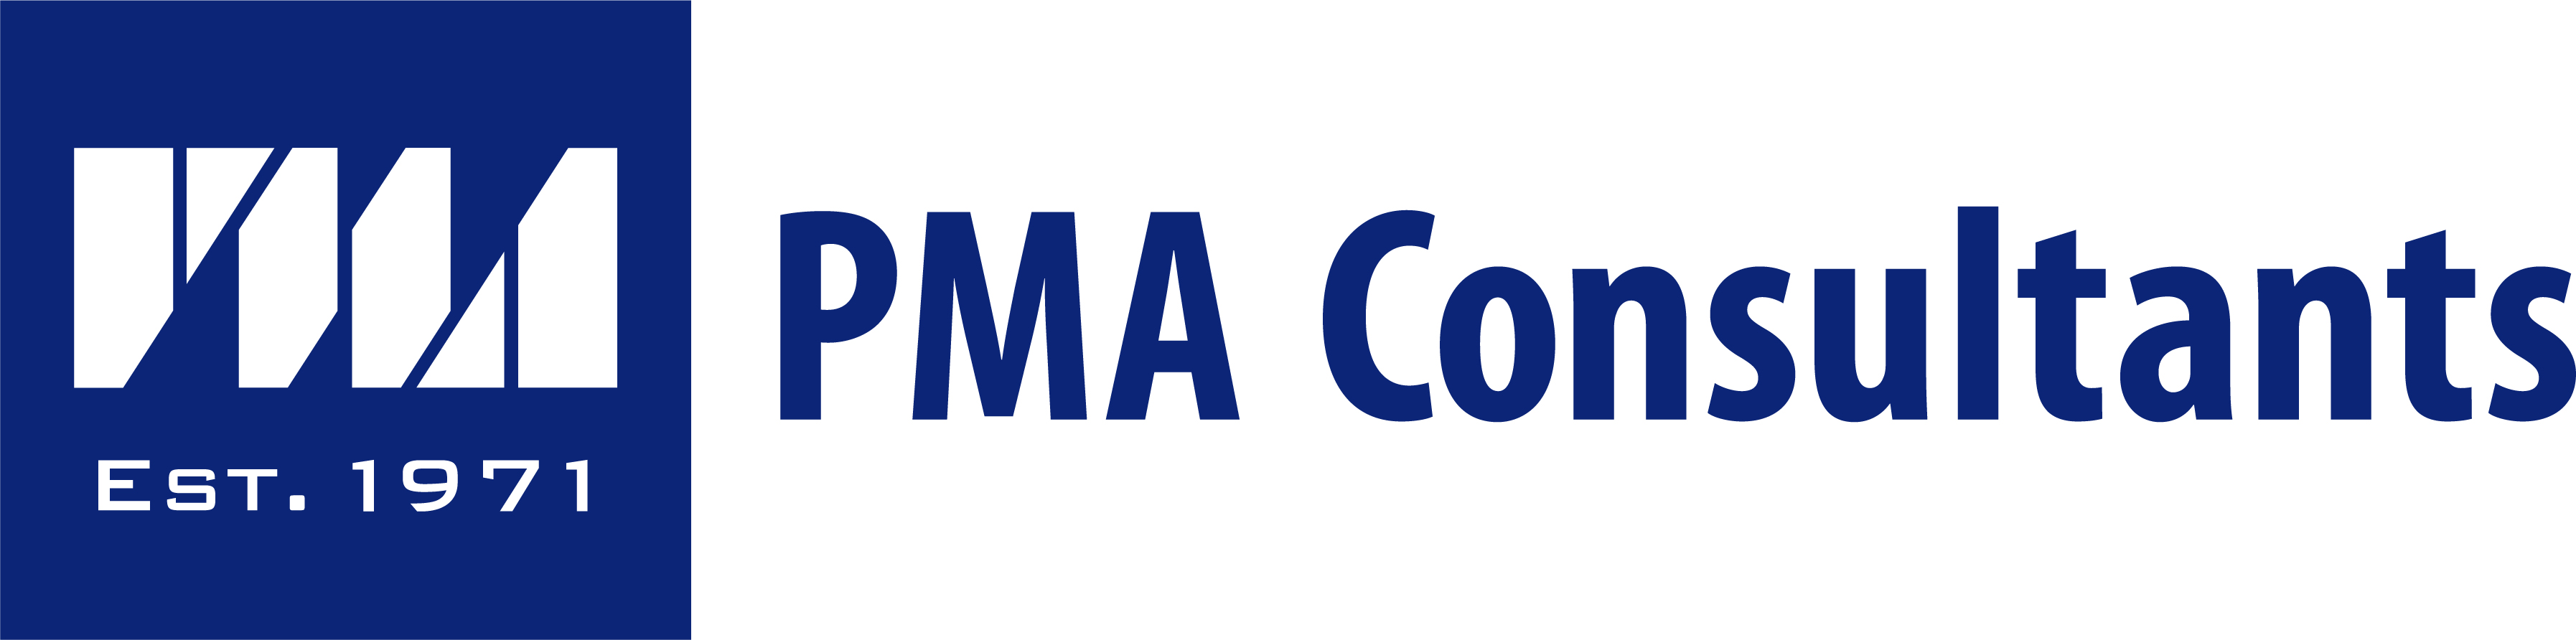 PMA Consultants logo